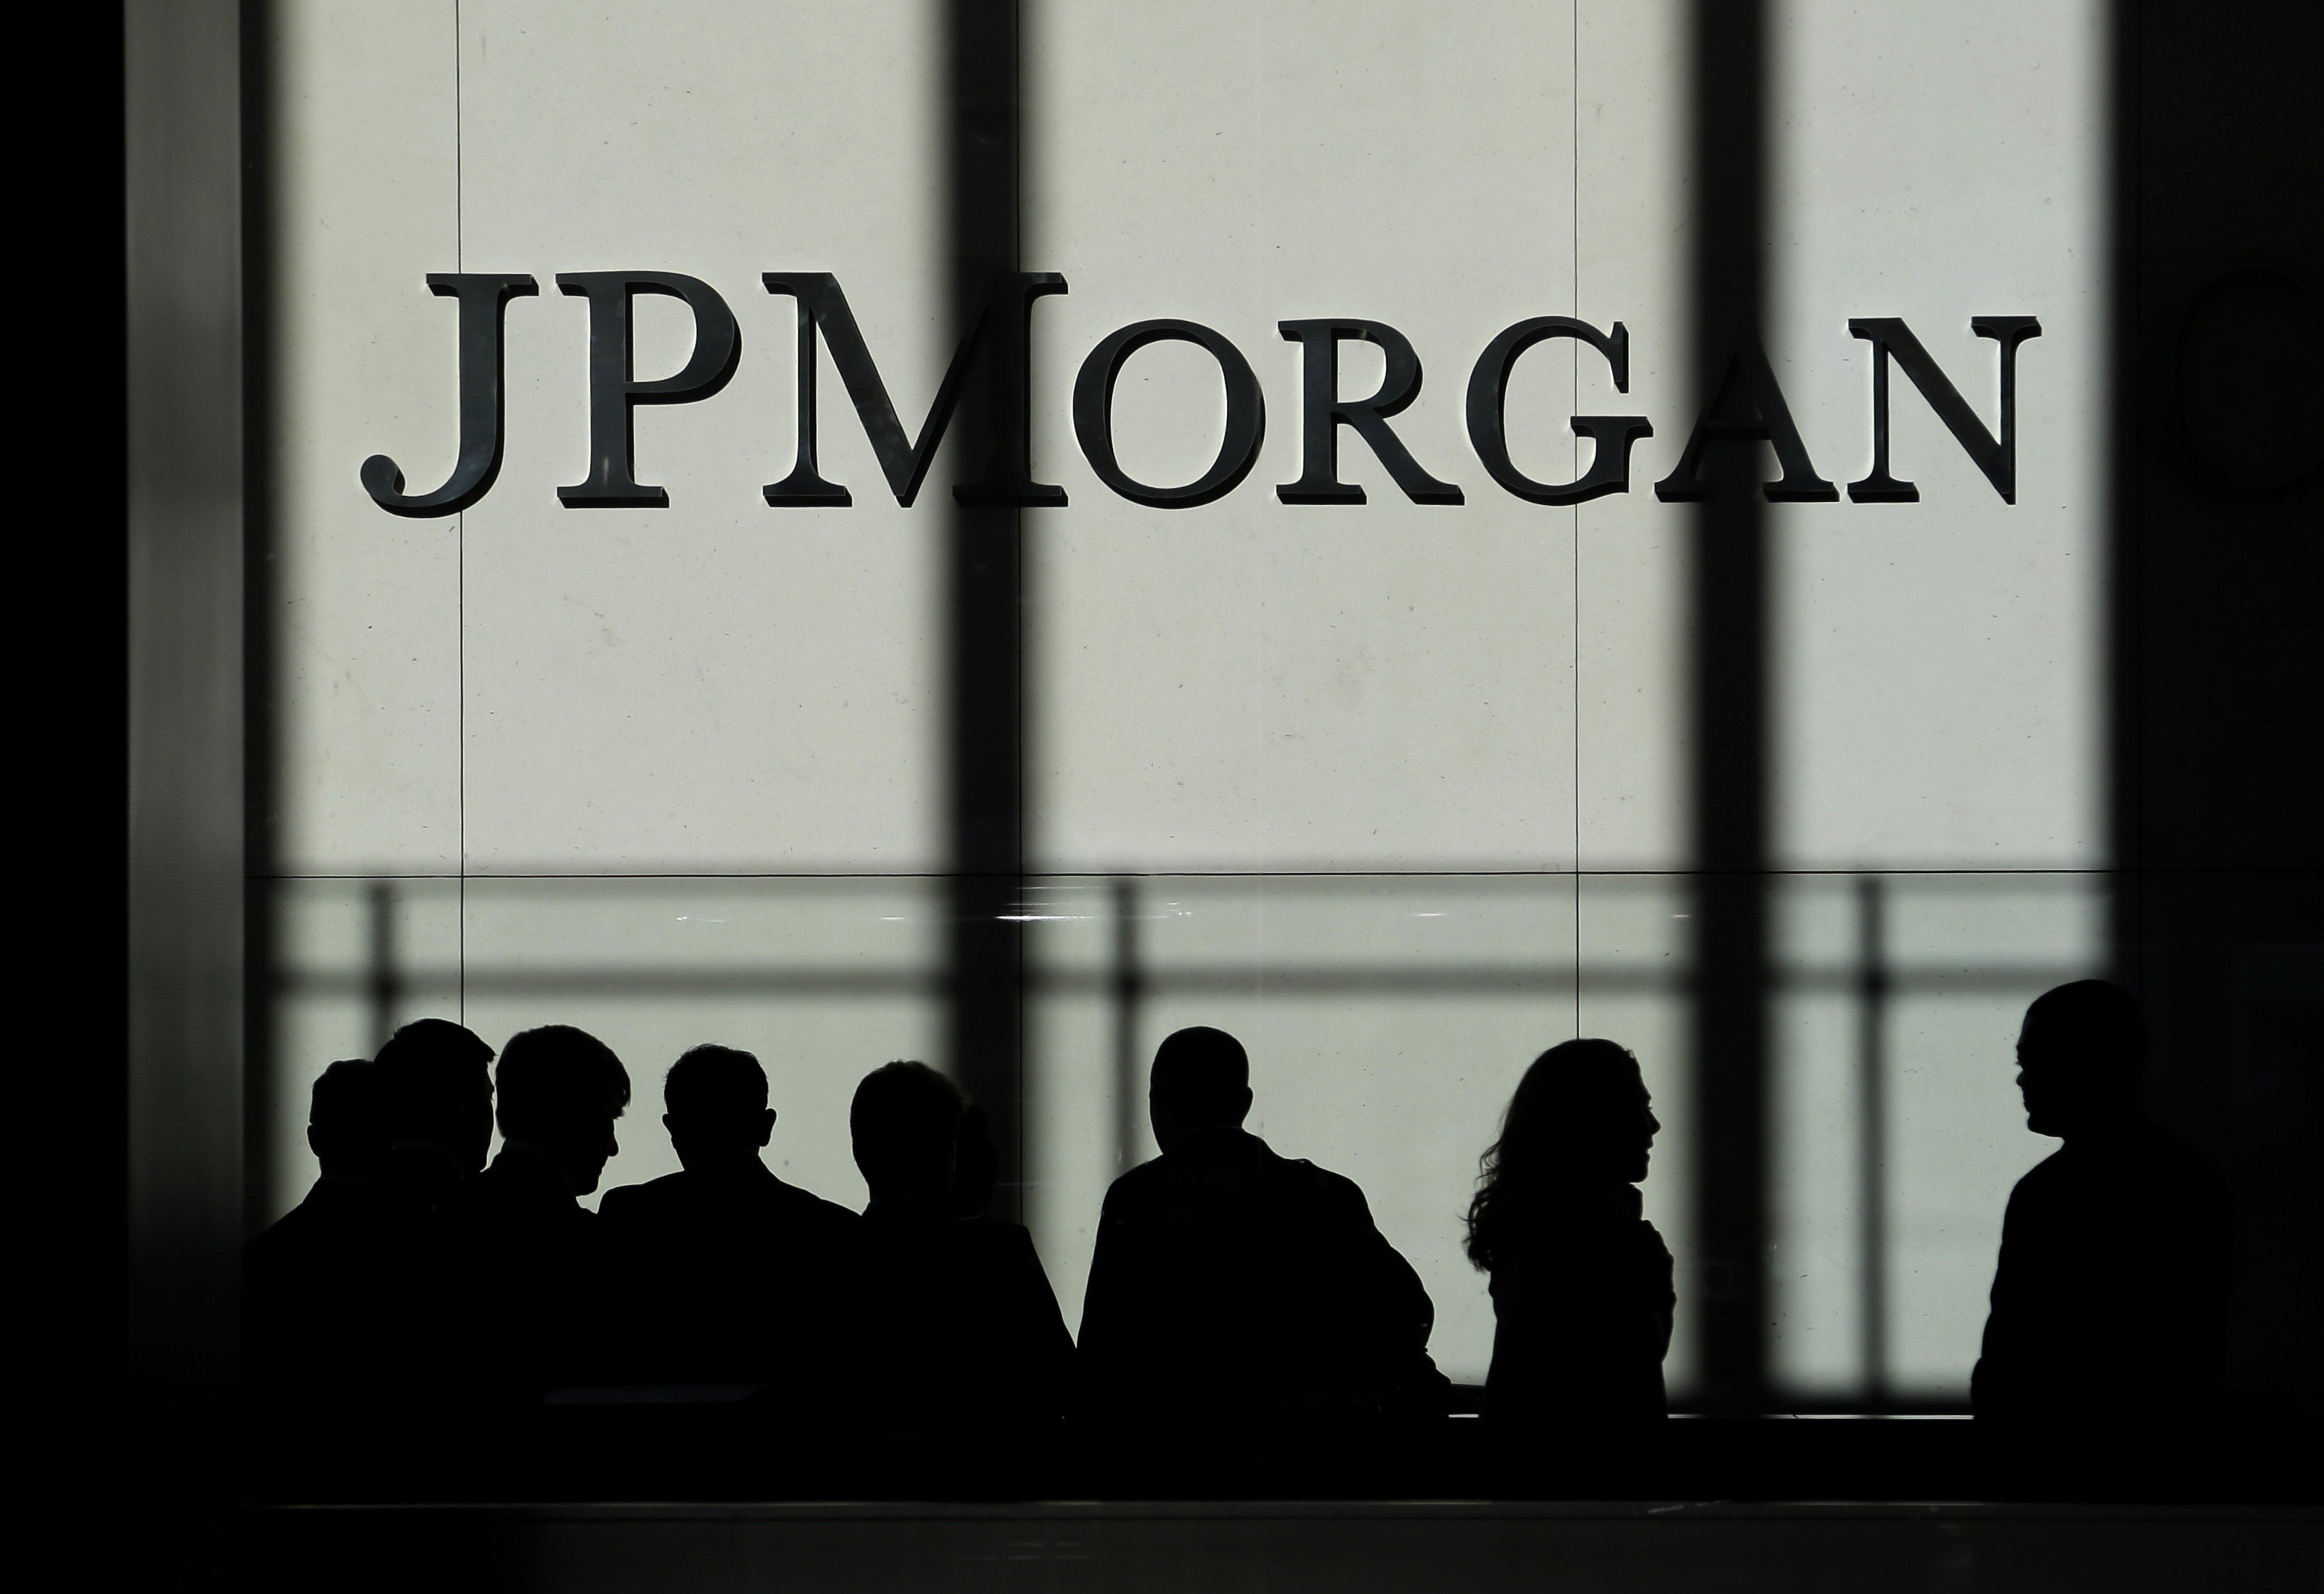 JPMorgan has been active in Taiwan since 1970. Photo: AP